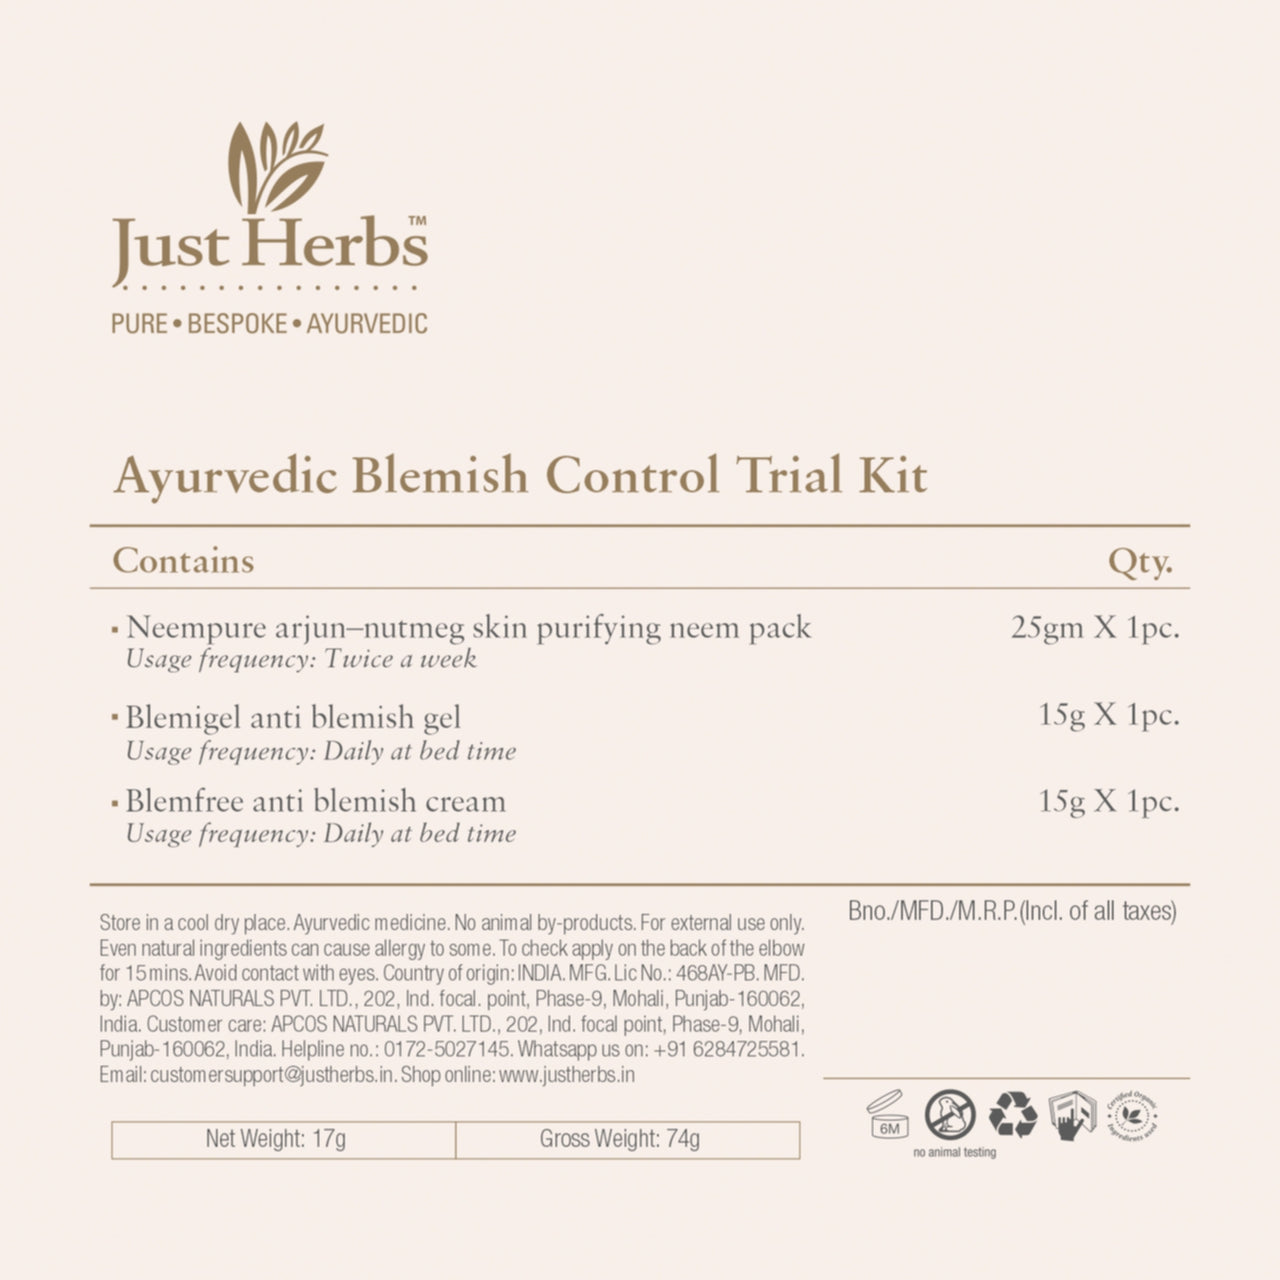 Ayurvedic Blemish Control Trial Kit